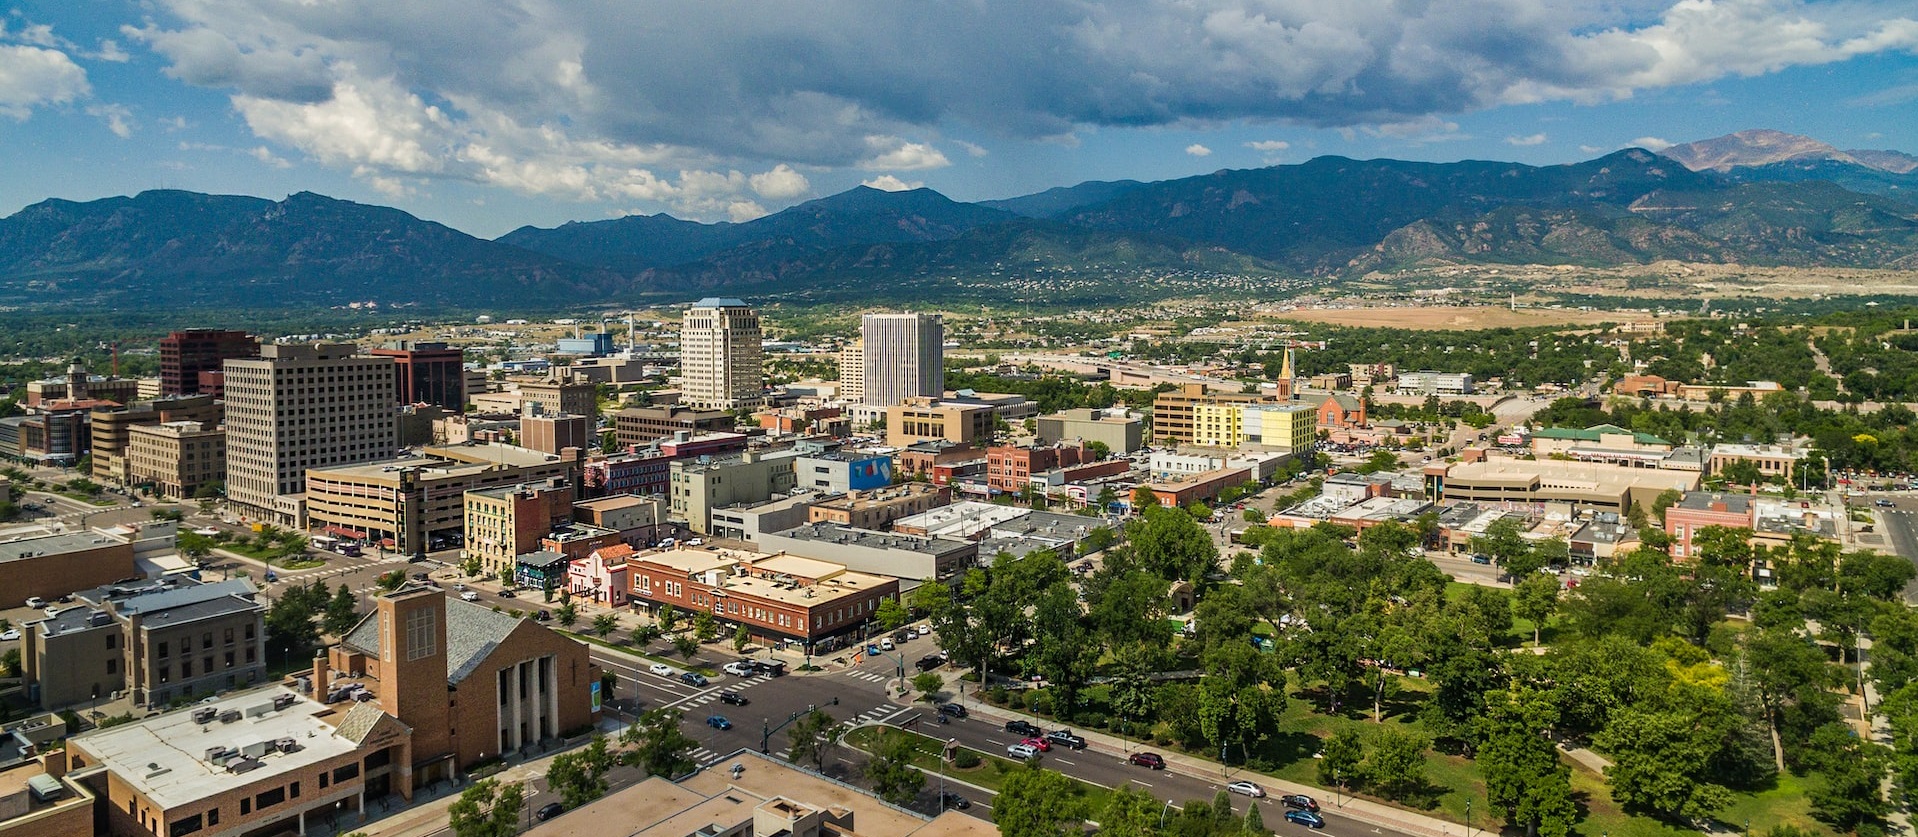 Cityview of Colorado Springs | Kids Car Donations